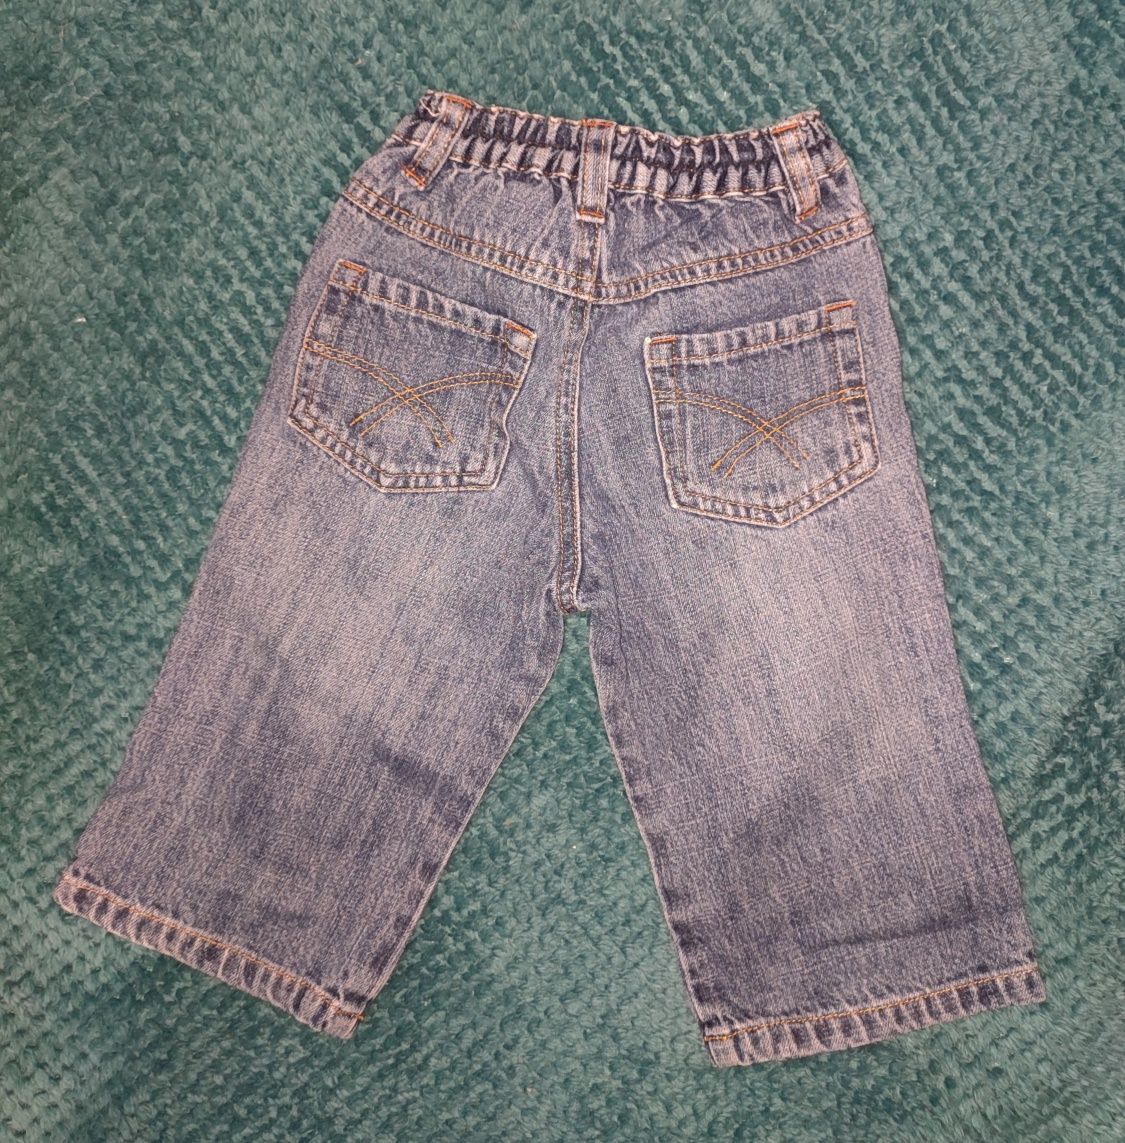 Spodnie jeansy dla chłopca Mothercare 80